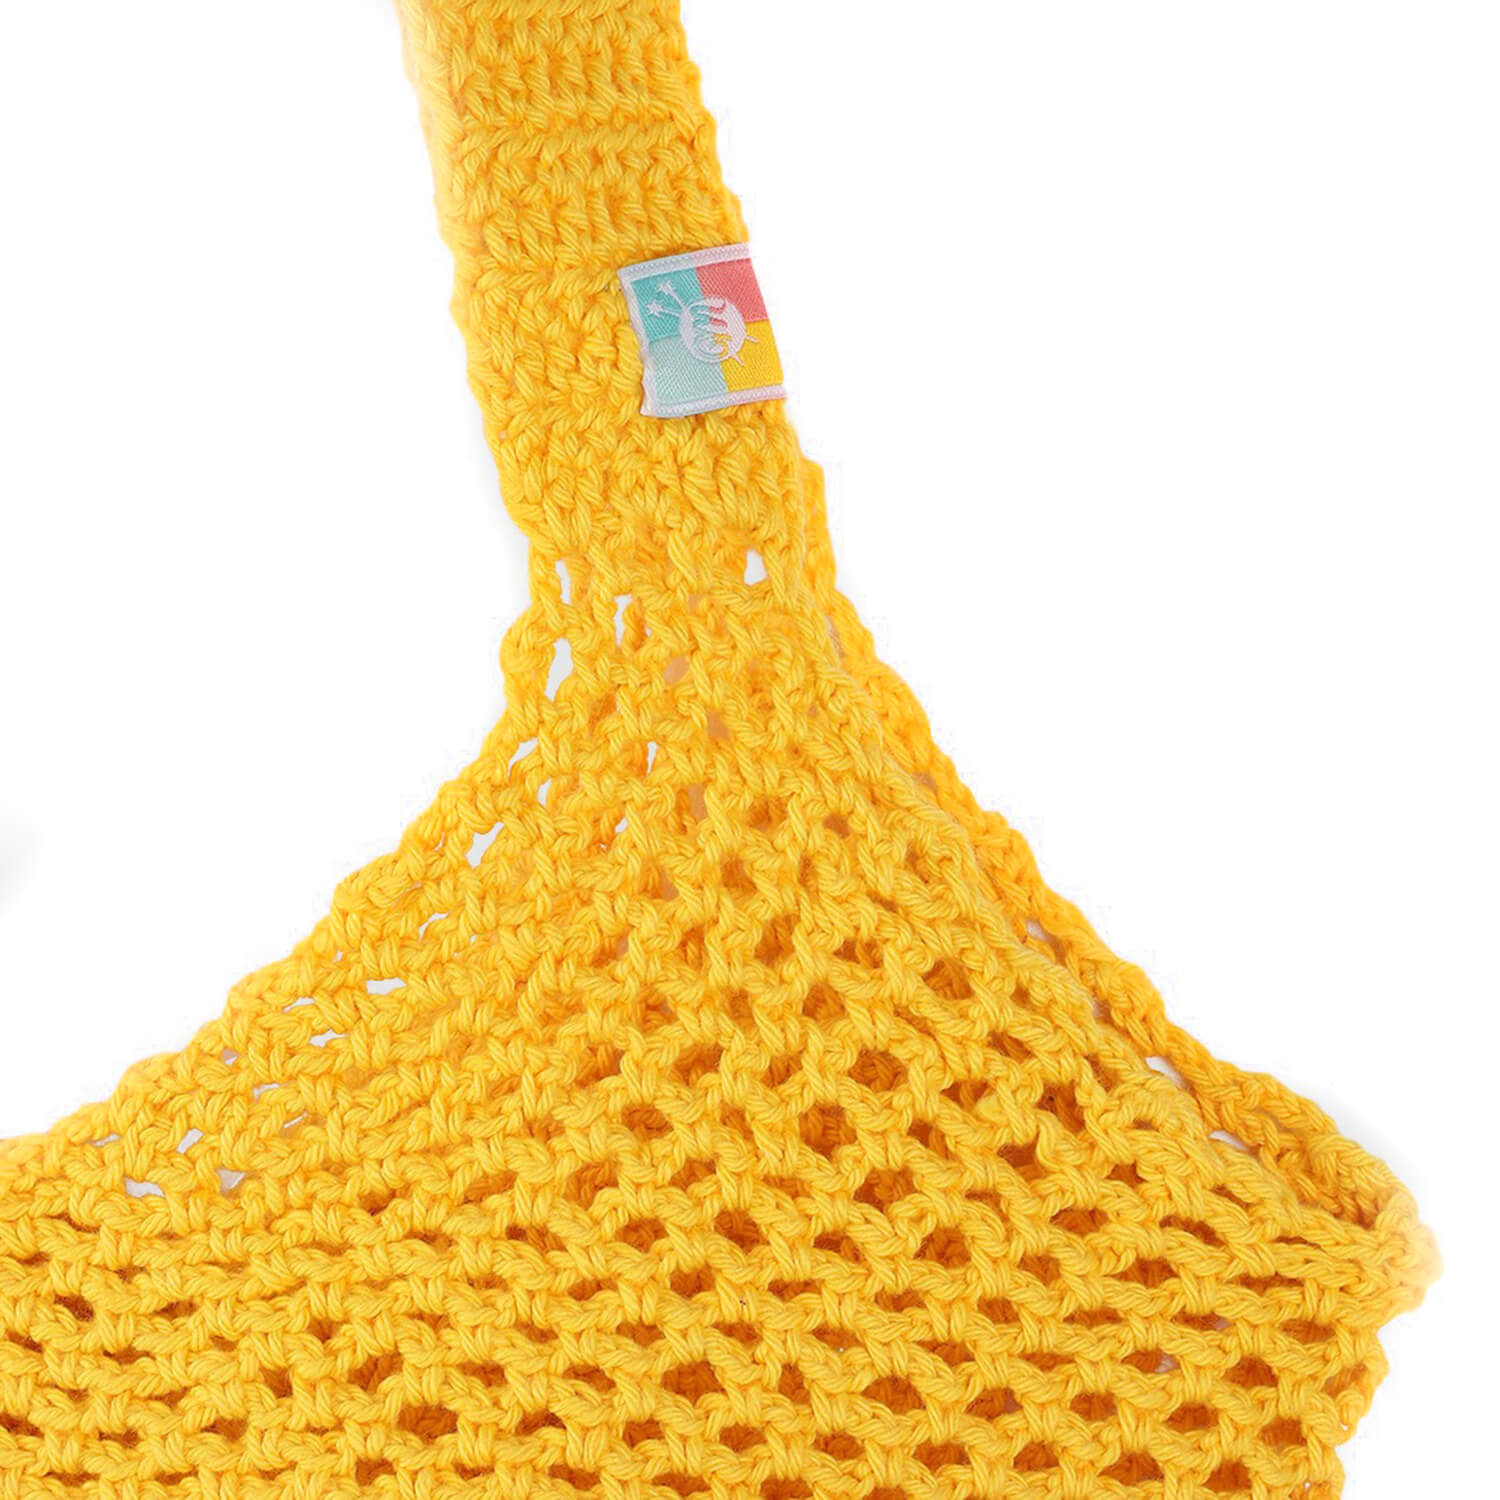 Handmade Crochet Market Bag - Yellow 2692